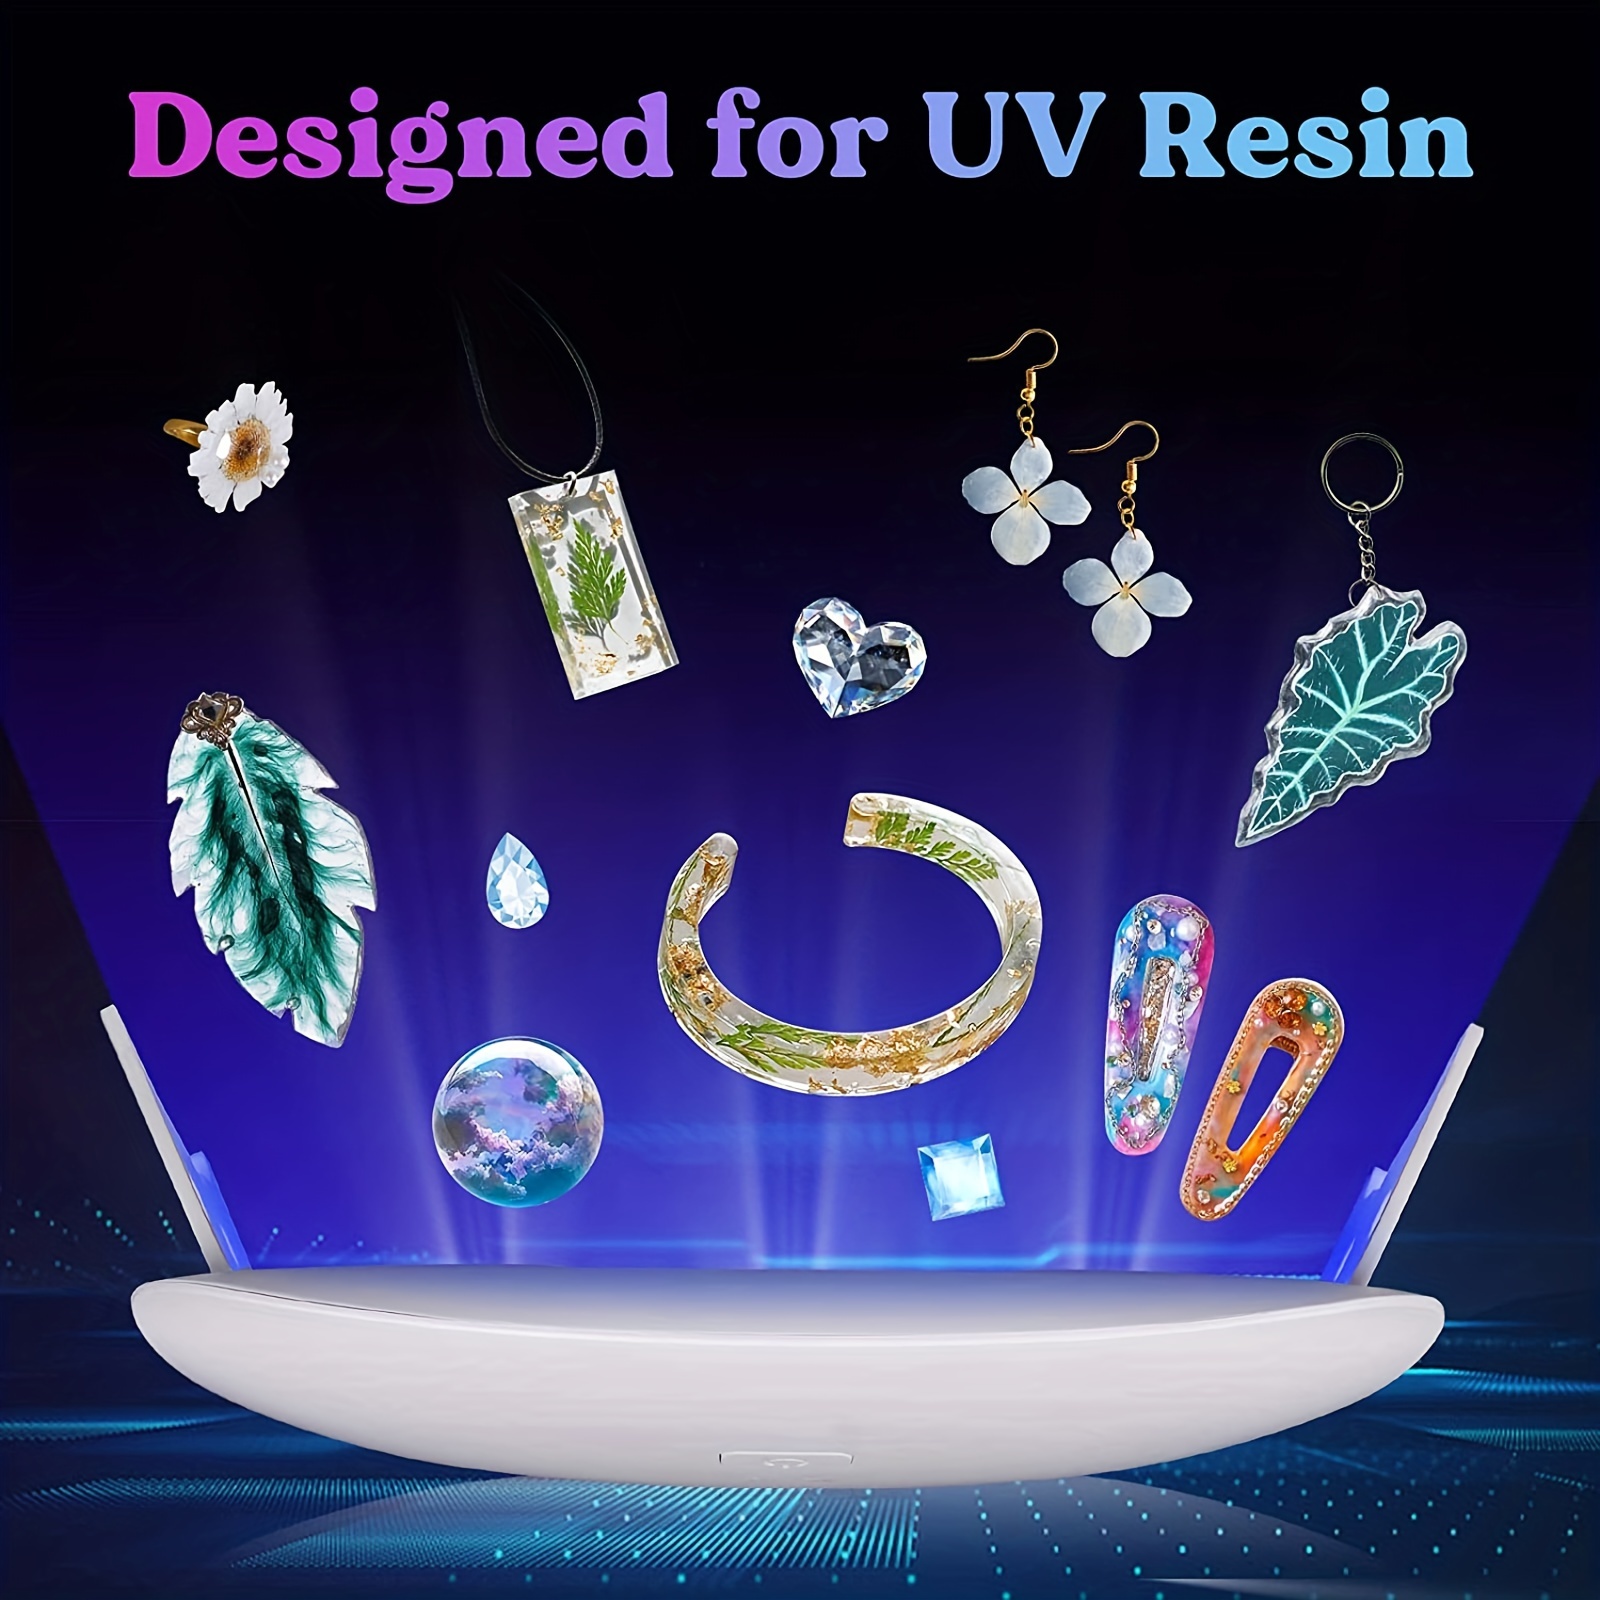 UV Light For Uv Resin 6w - Crafteroof